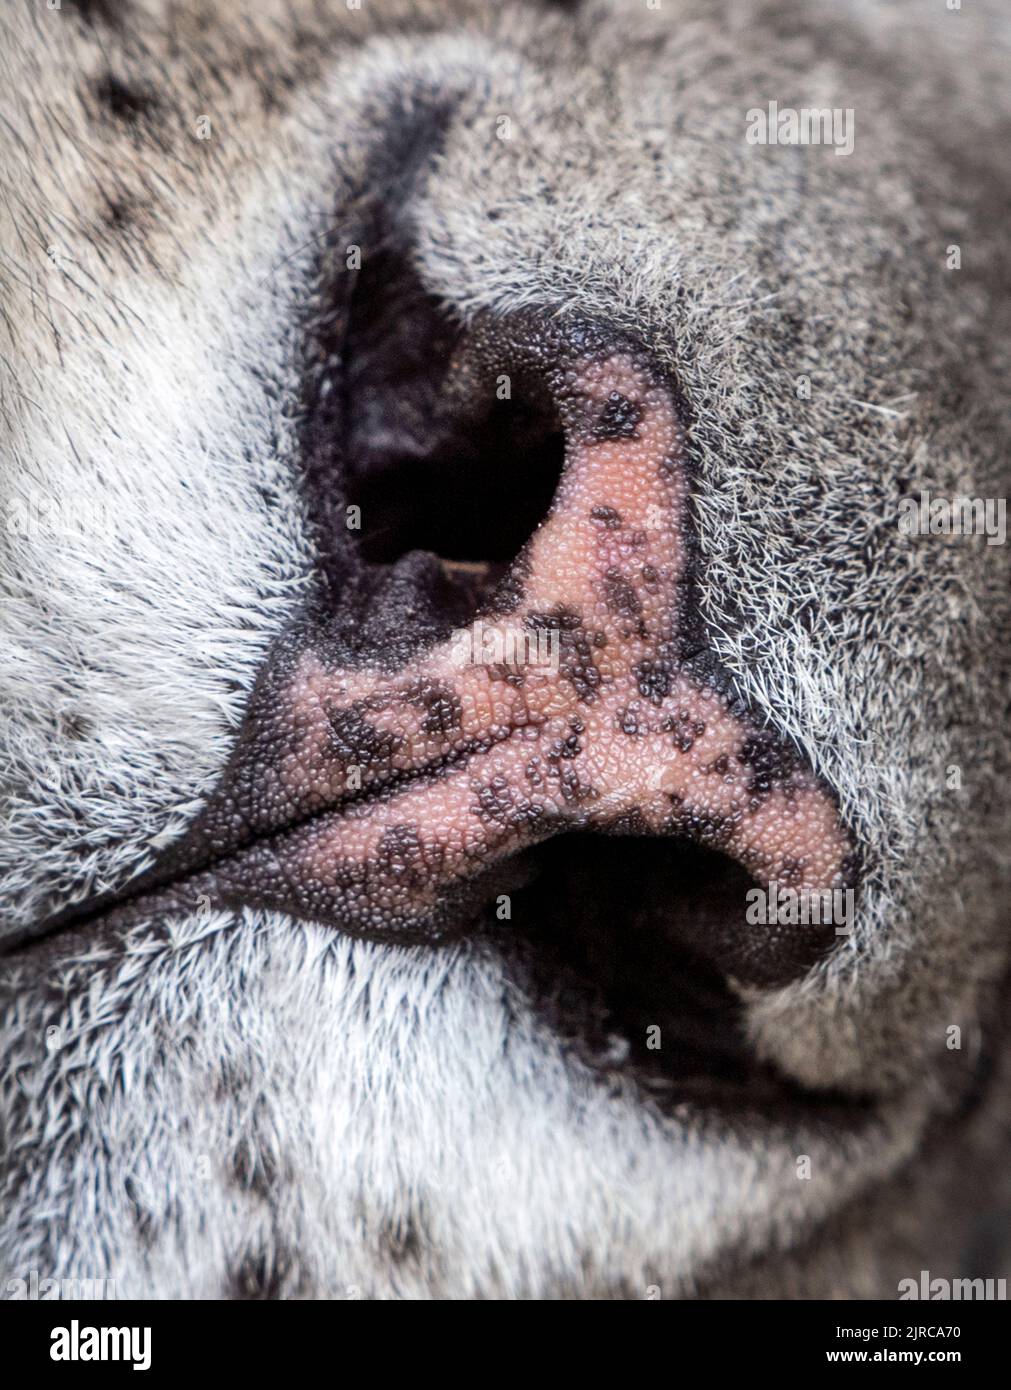 Fosa nasal de leopardo de nieve hembra adulto (primer plano extremo) Foto de stock